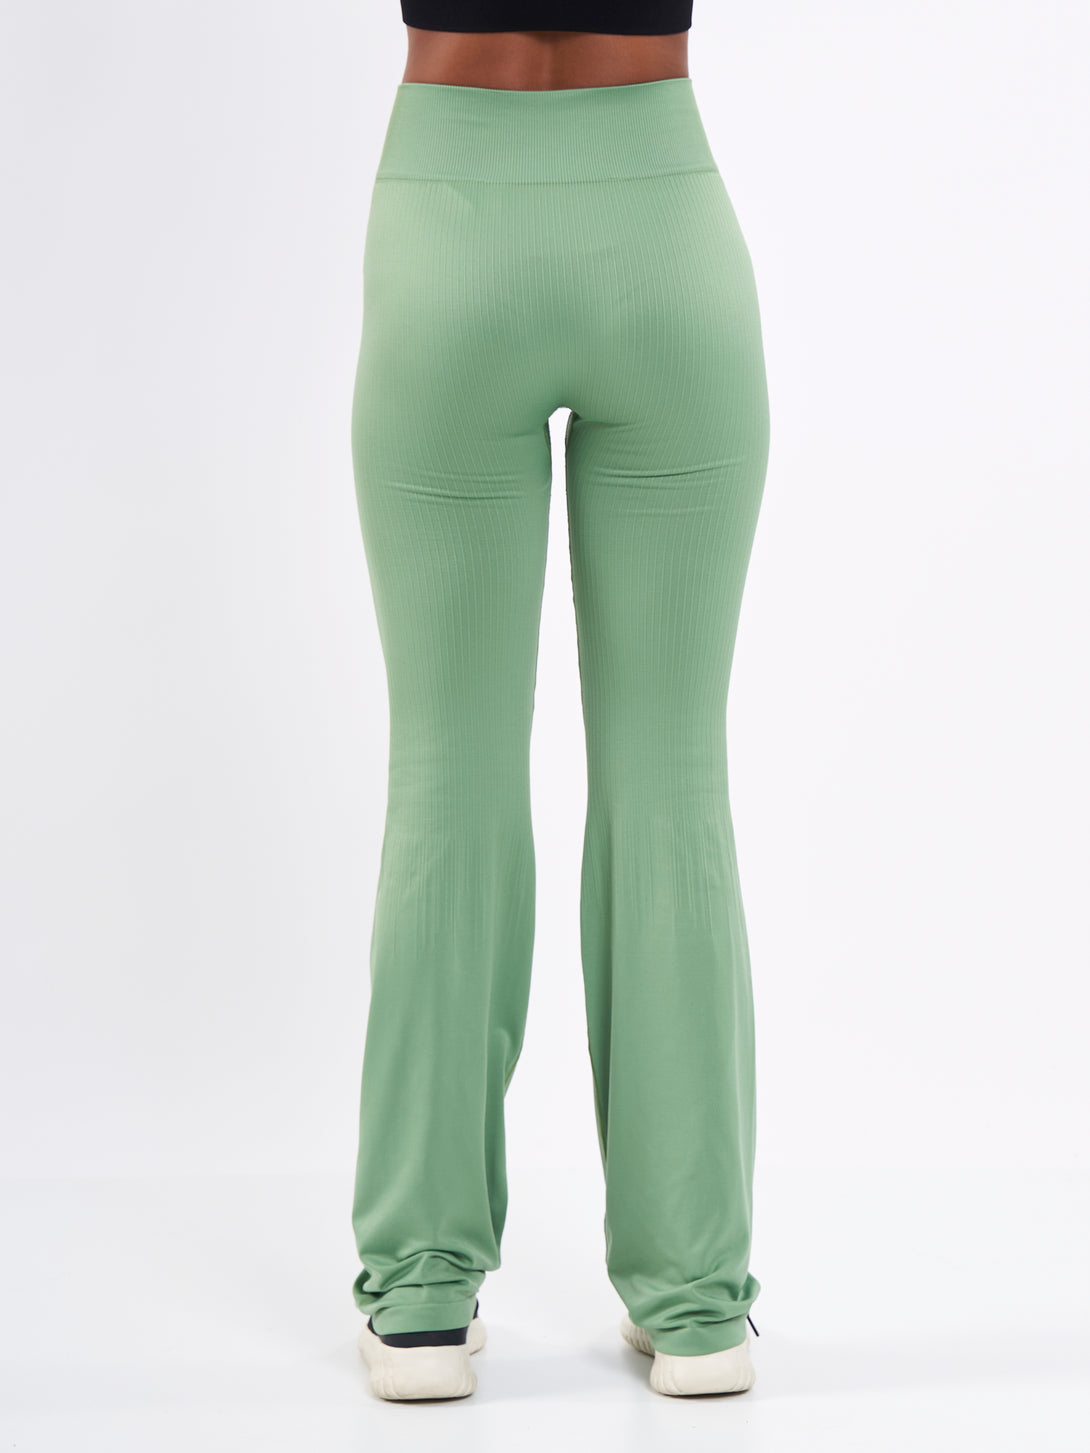 A Woman Wearing Mist Green Color Antigravity Seamless Flare-Leg Yoga Pants. Ultra-Light